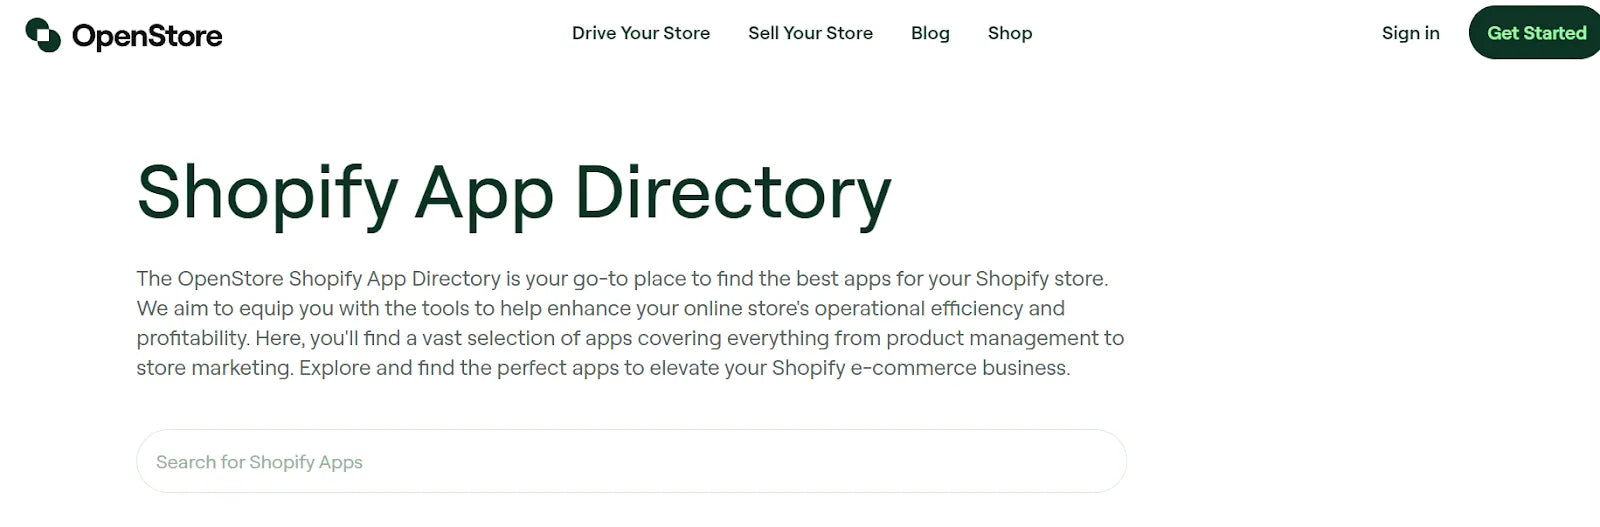 Screenshot of OpenStore landing page